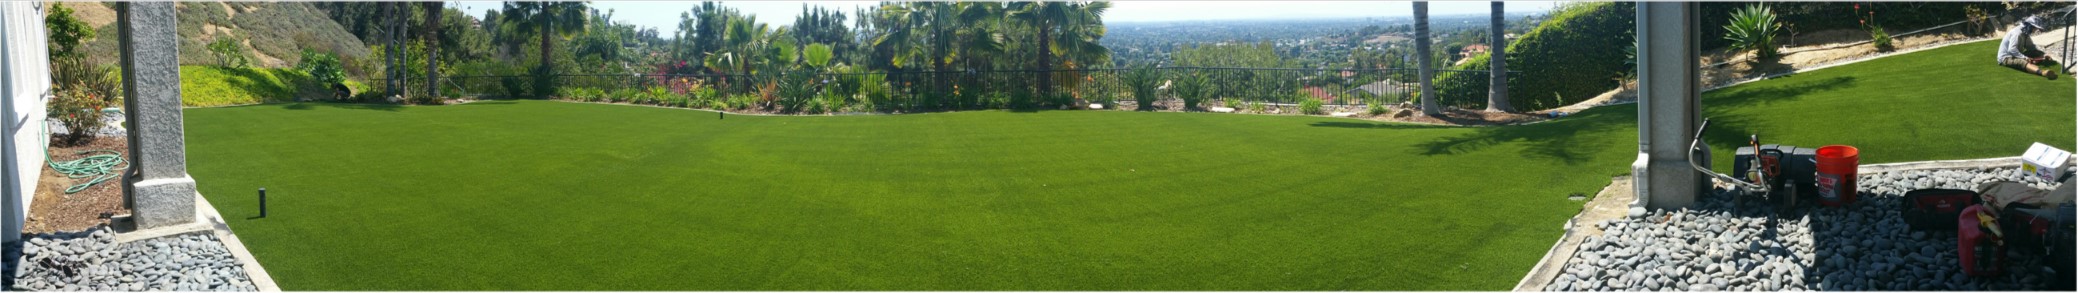 Artificial Grass Maintenance Tips, Green-R Turf of Ventura